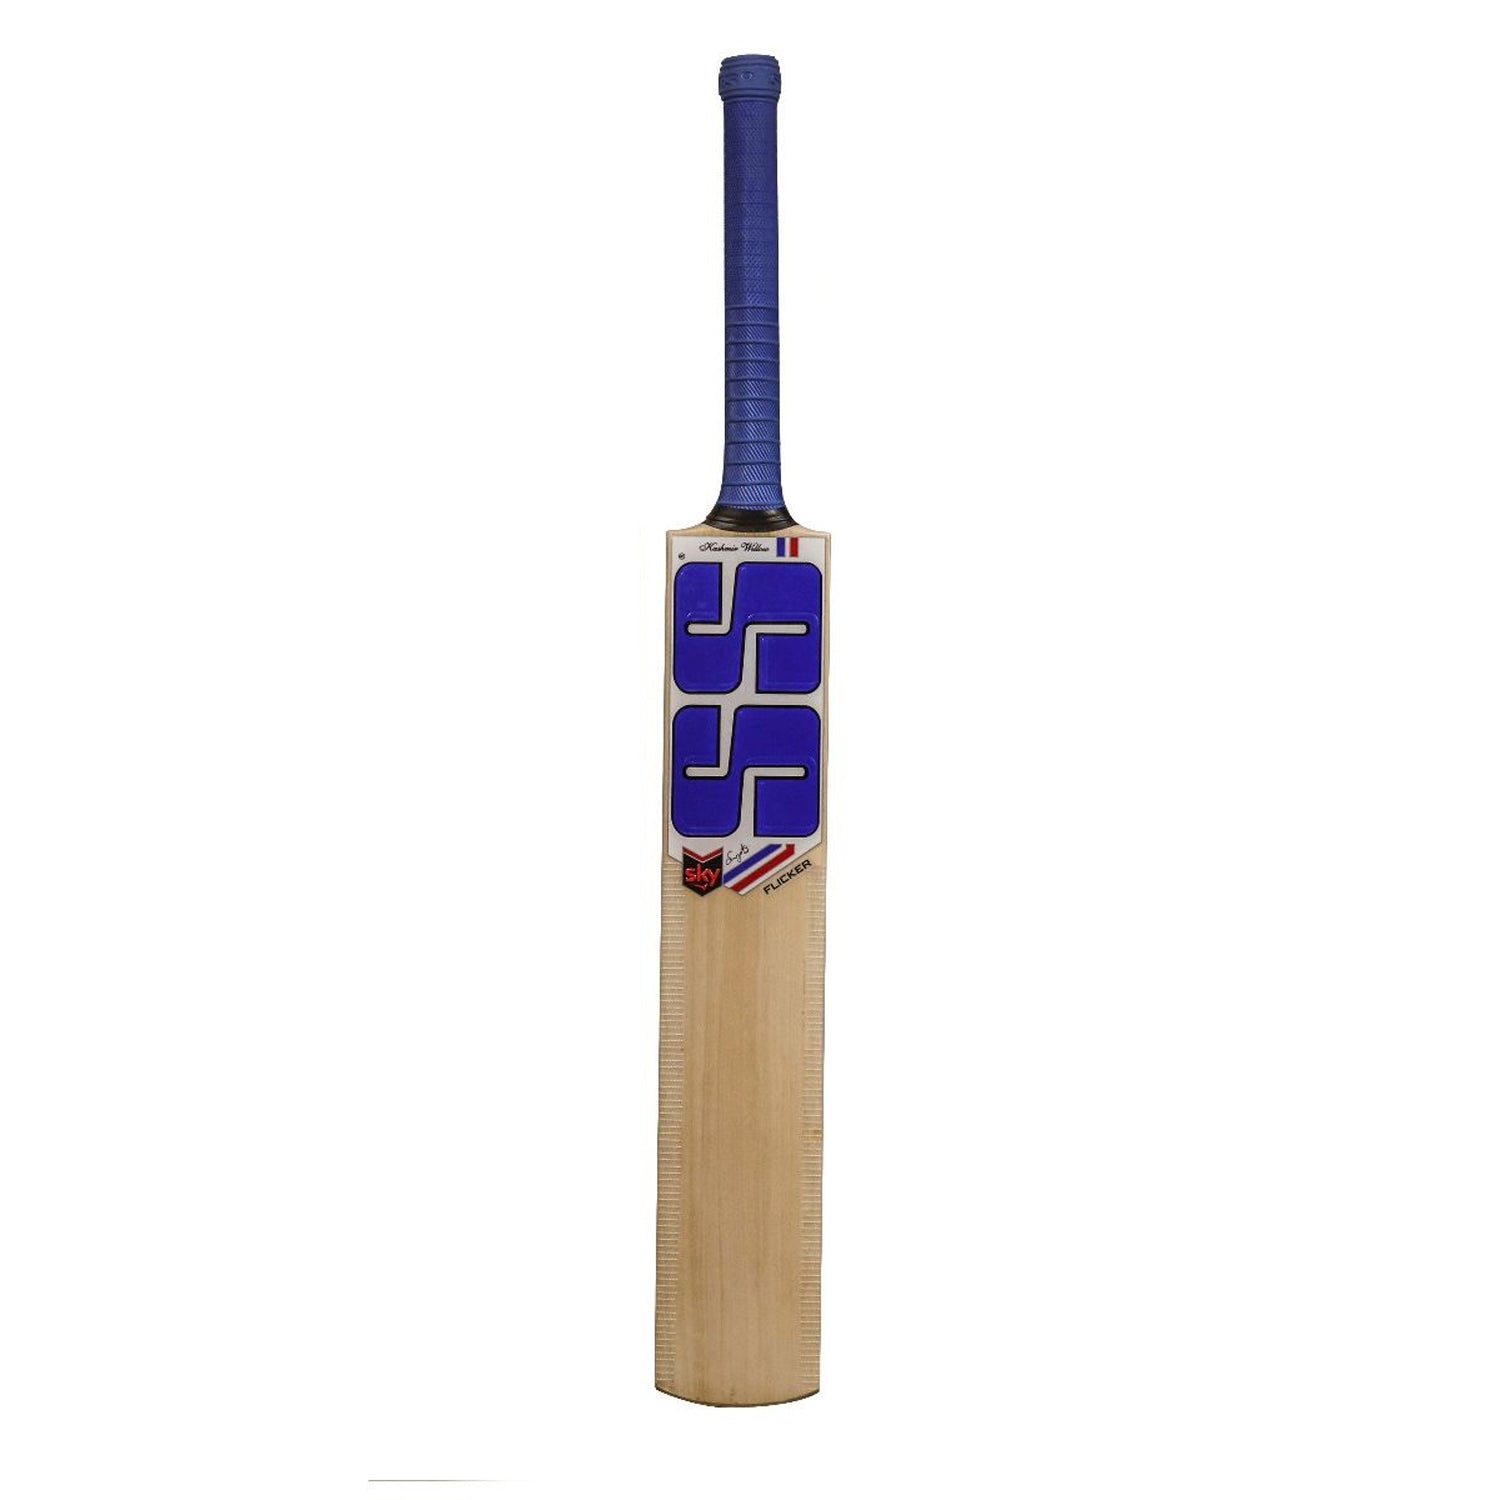 SS SKY Kashmir Willow Full Cricket Kit With Helmet - Best Price online Prokicksports.com